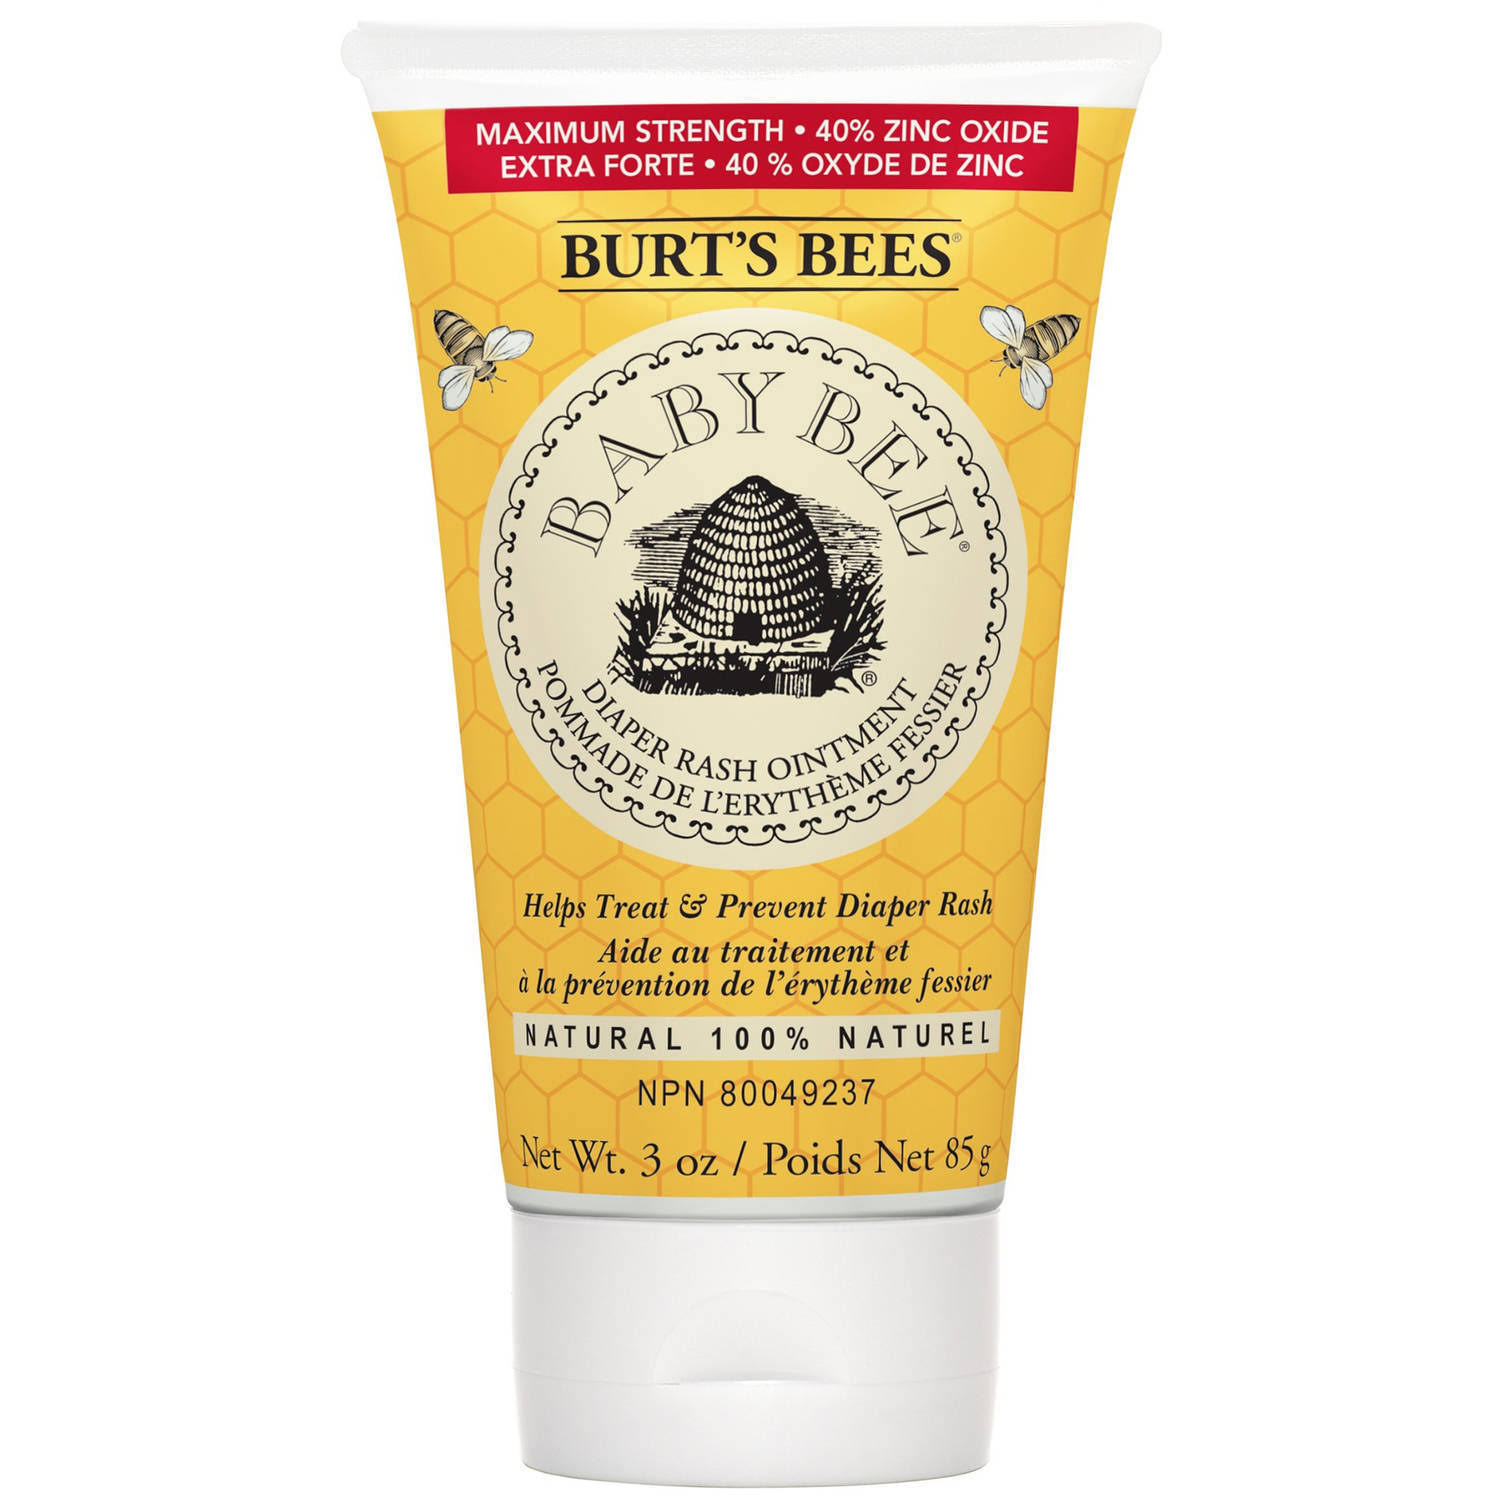 Burt's Bees Baby Bee Natural Diaper Rash Ointment - 3oz